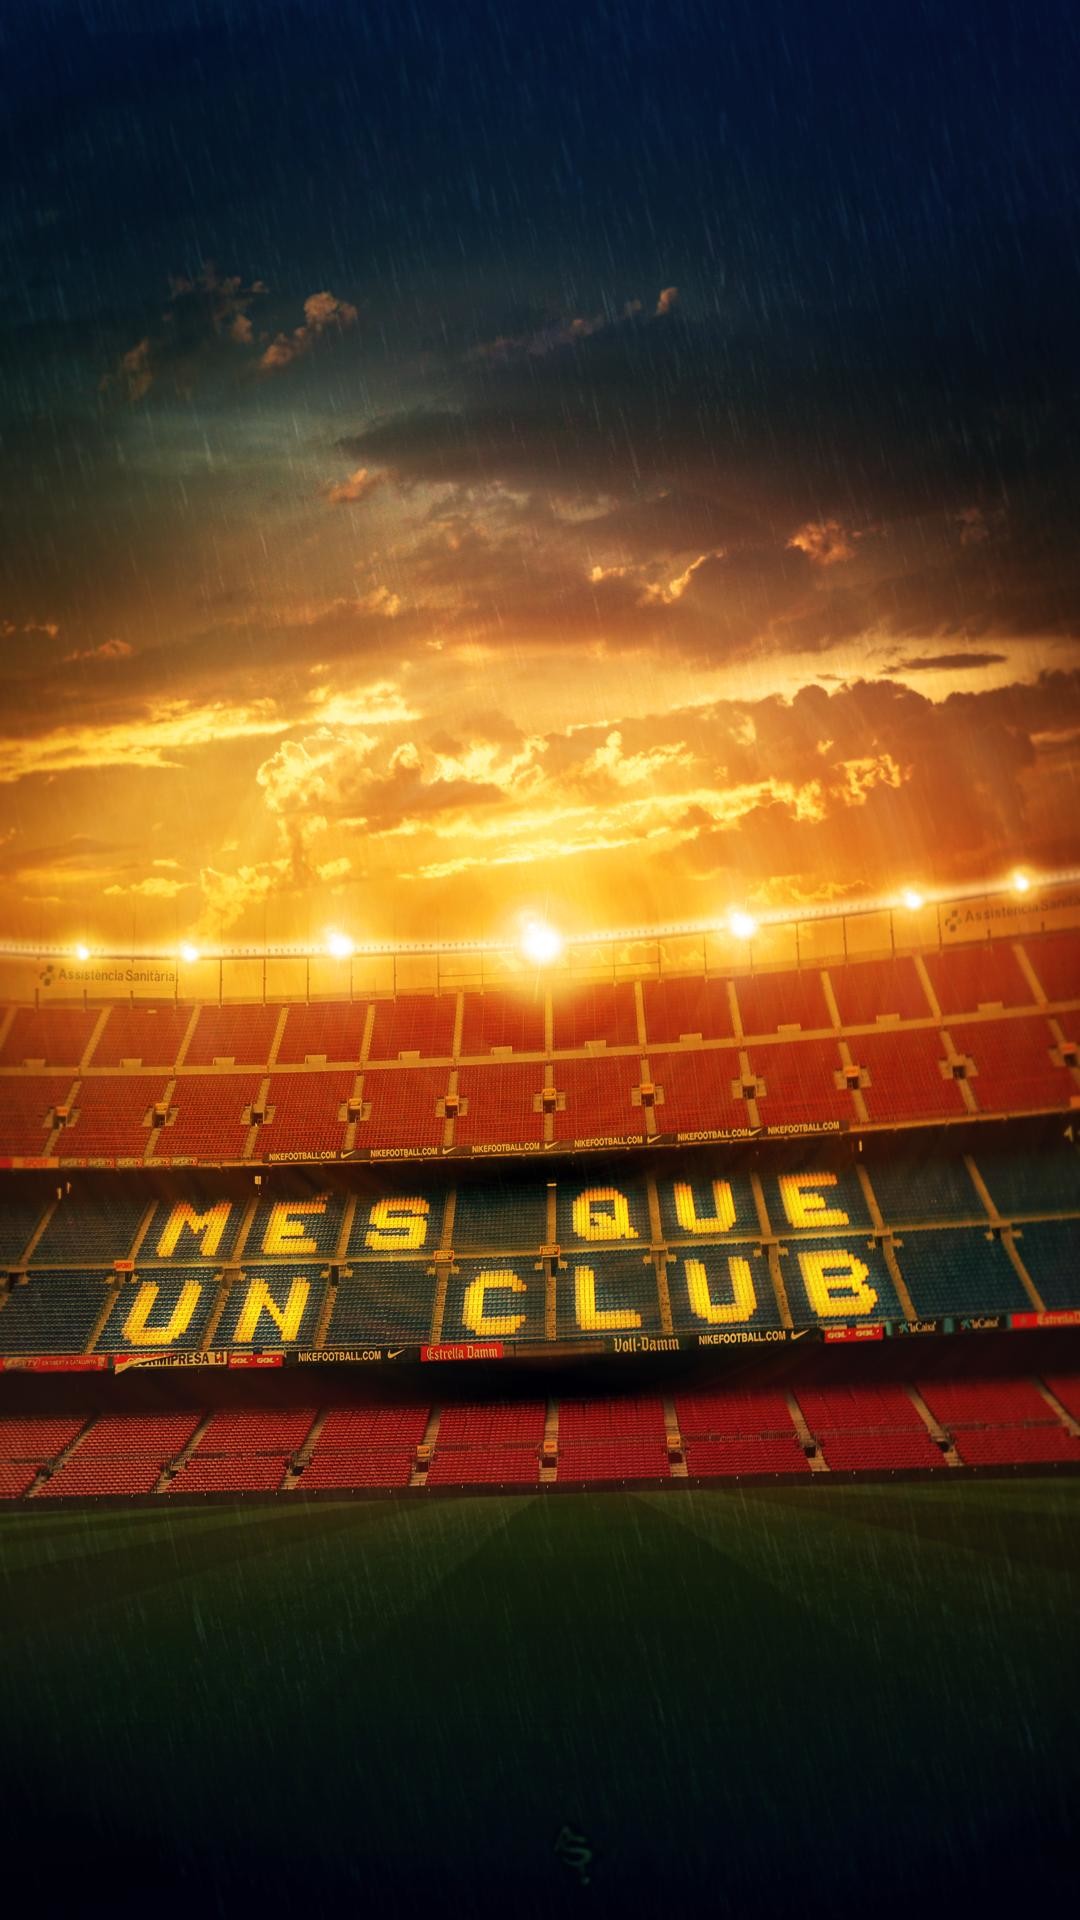 1080x1920 290 best Stadiums images on Pinterest | Football stadiums, Architecture and  Stadium architecture